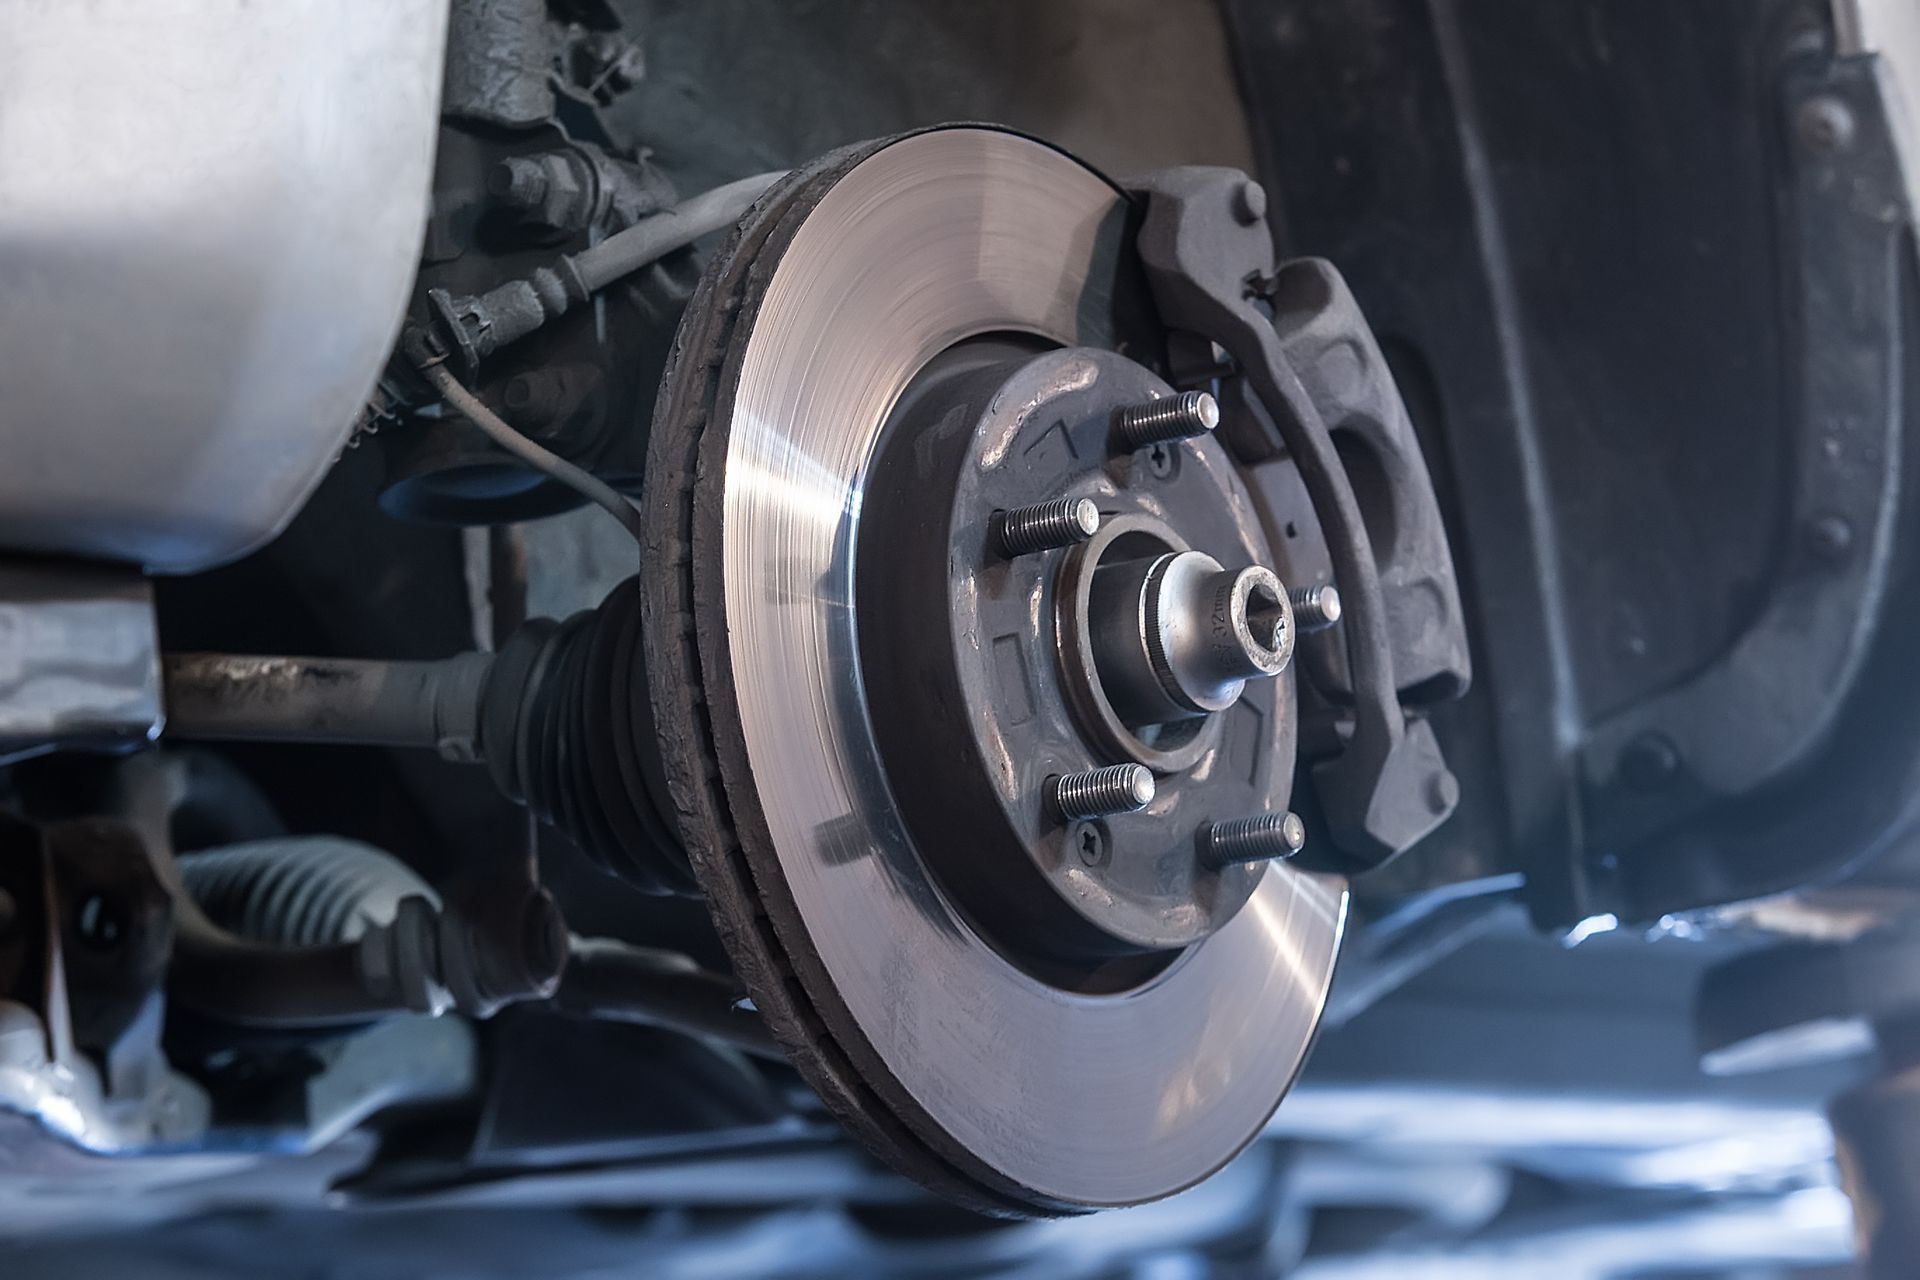 Close-up of car brake assembly showing brake pads and rotor